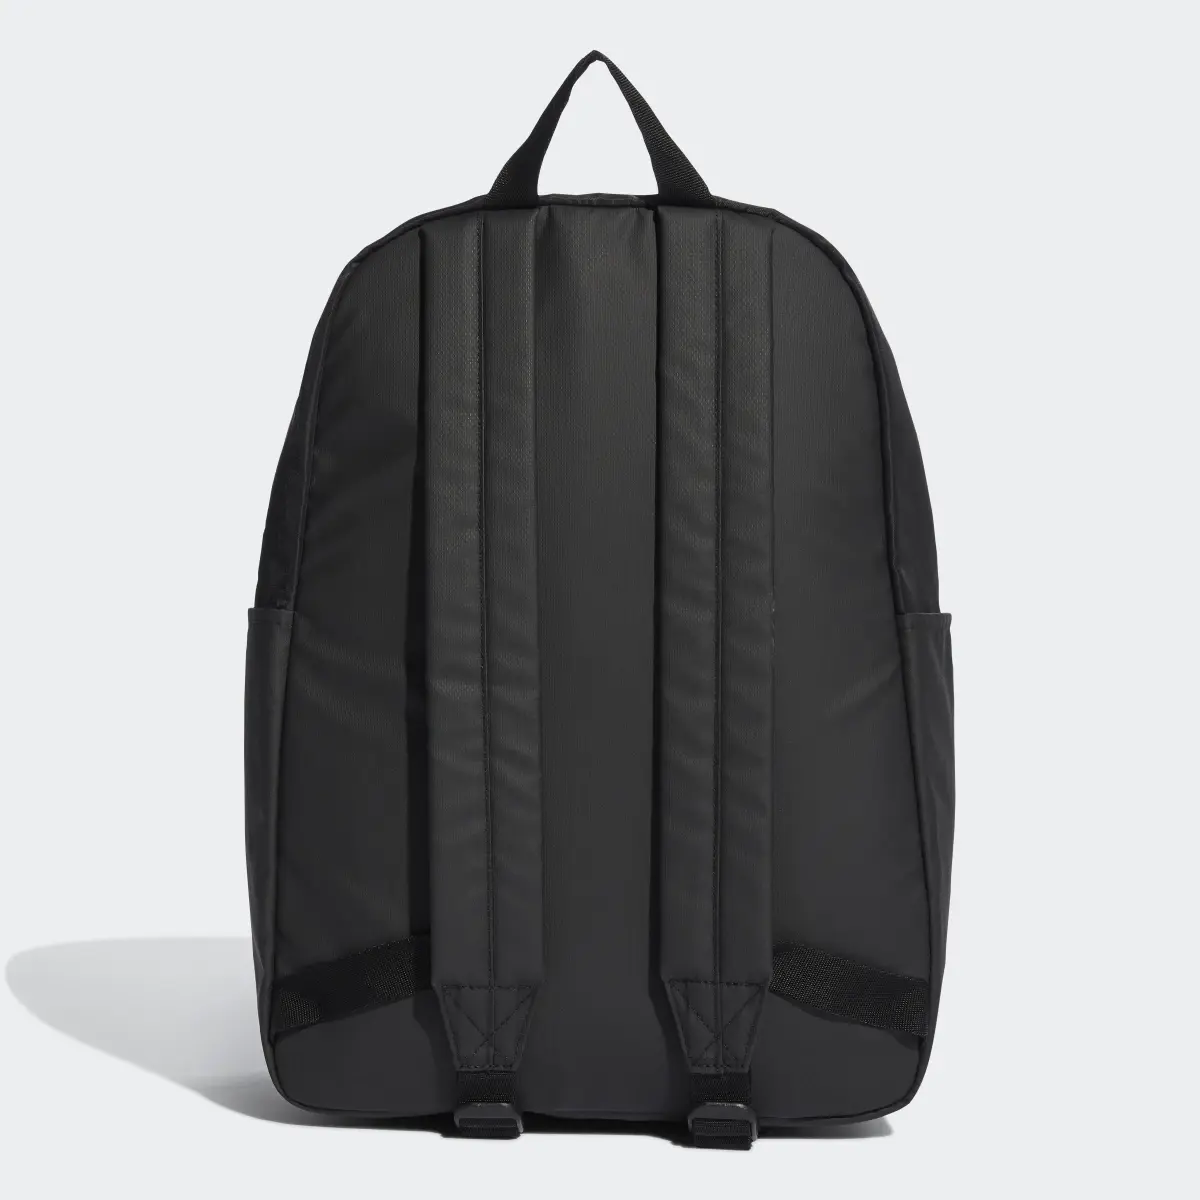 Adidas Backpack. 2